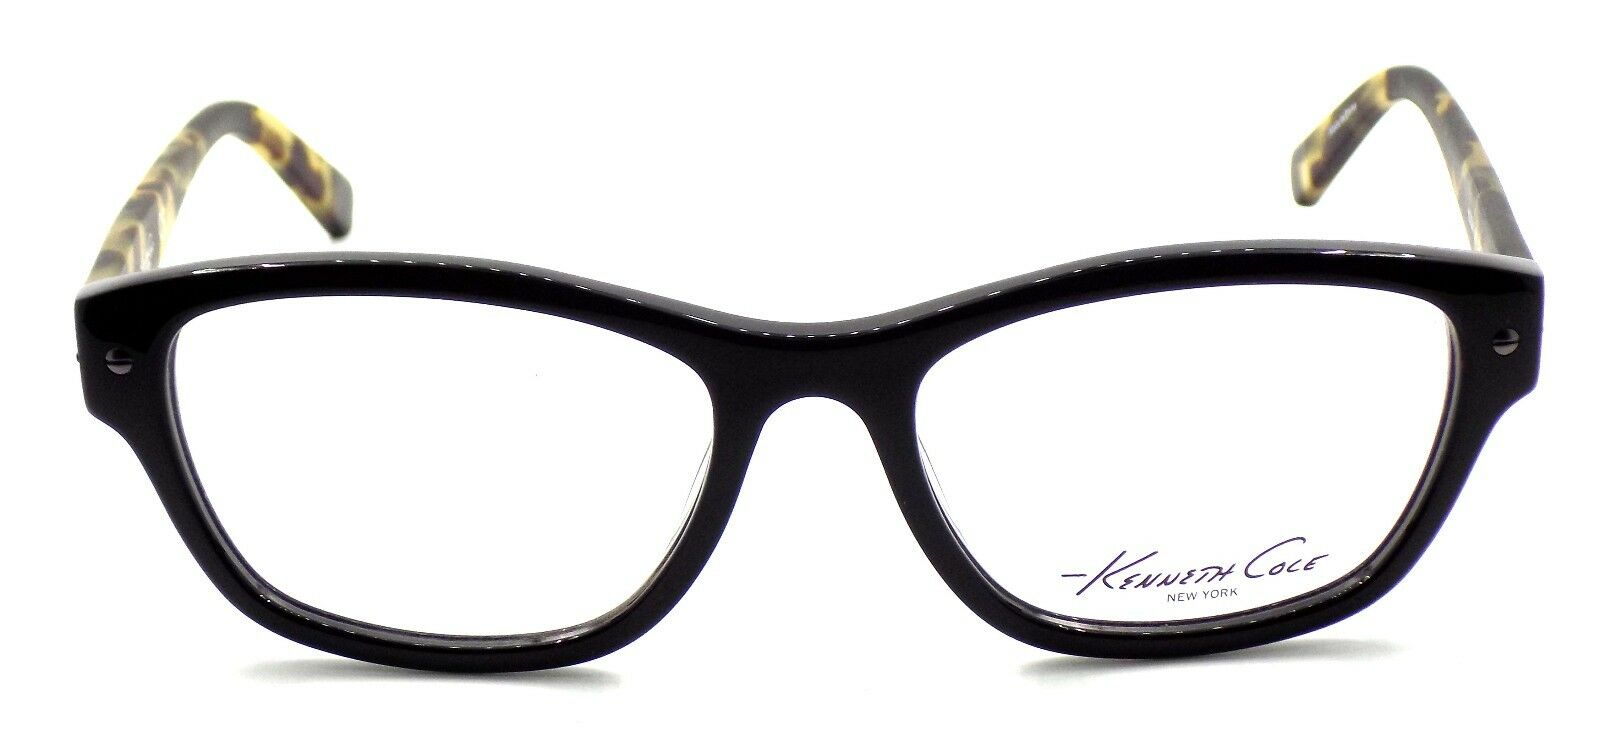 2-Kenneth Cole NY KC0244 001 Women's Eyeglasses 52-17-135 Shiny Black-664689815531-IKSpecs